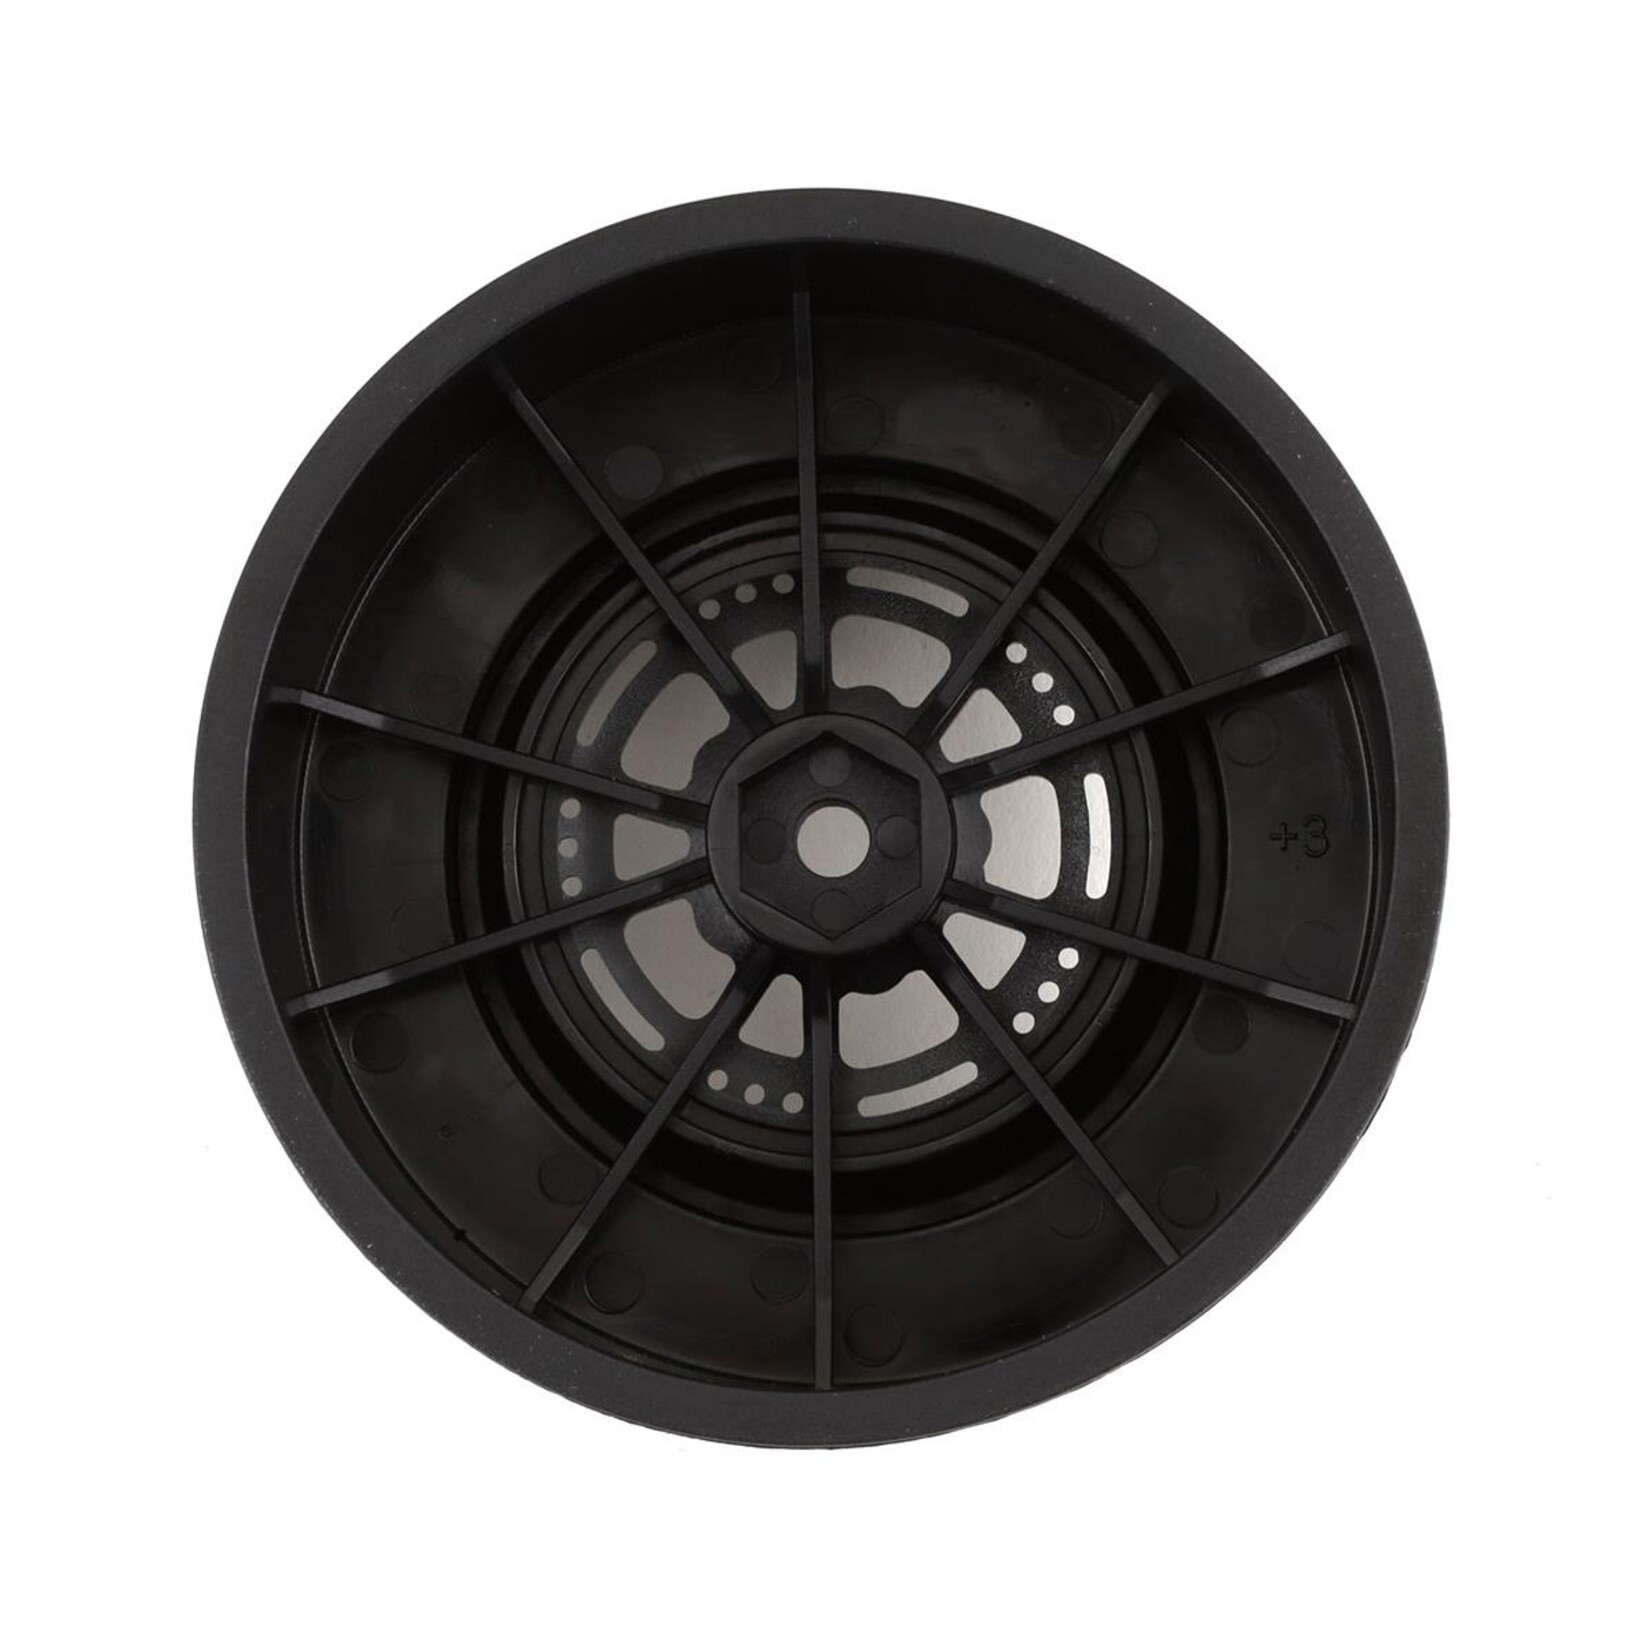 DragRace Concepts DragRace Concepts AXIS 2.2/3.0" Drag Racing Rear Wheels (Black) (2) (-3 Offset) #219